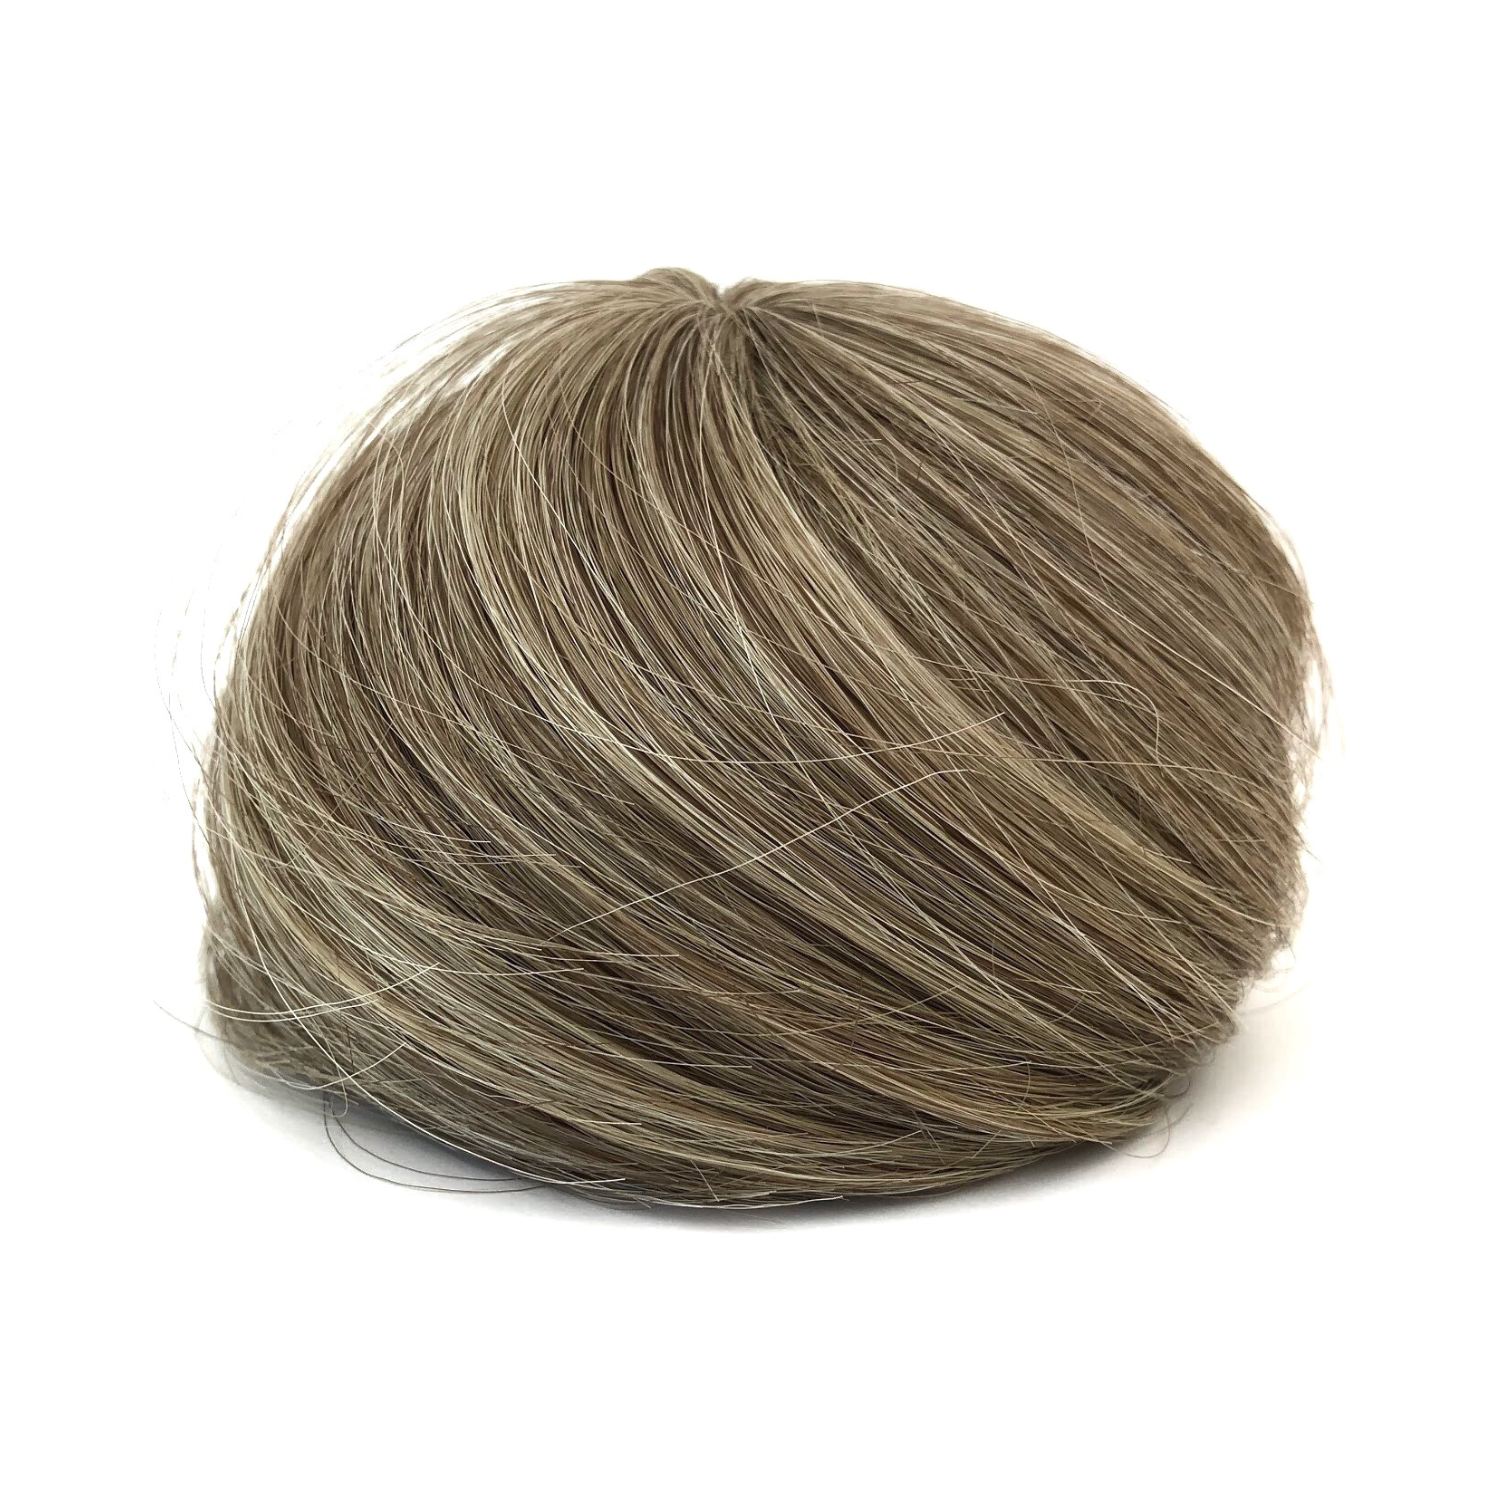 image of hair rehab london clip on bun hairpiece in shade sandy